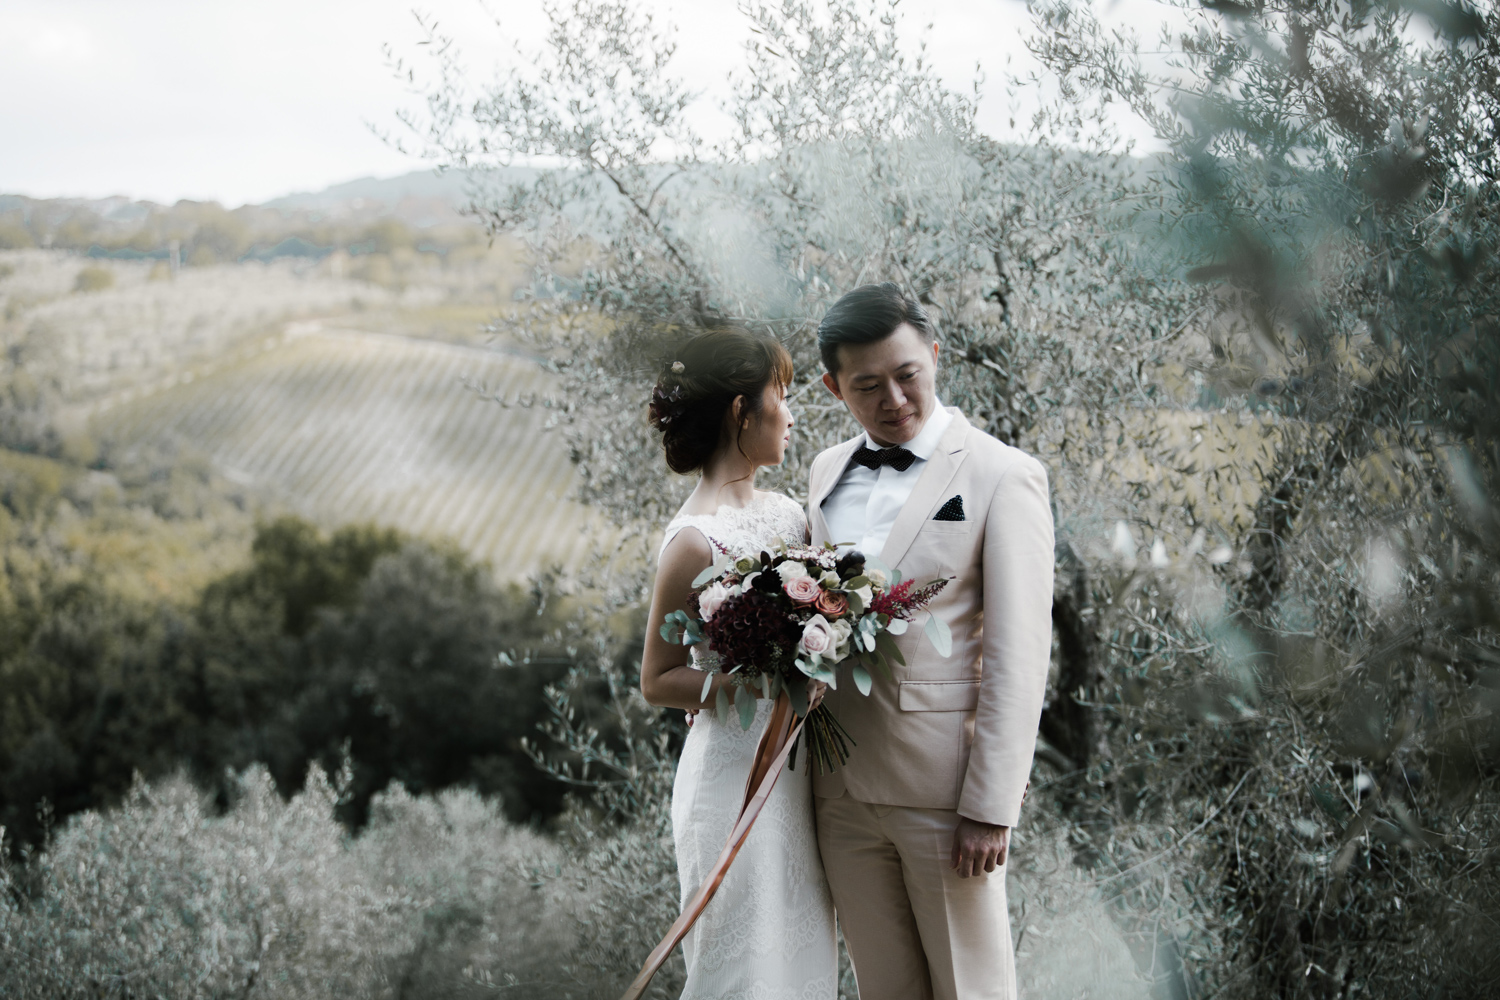 066-wedding-photographer-italy-tuscany-mindy-eddy.jpg